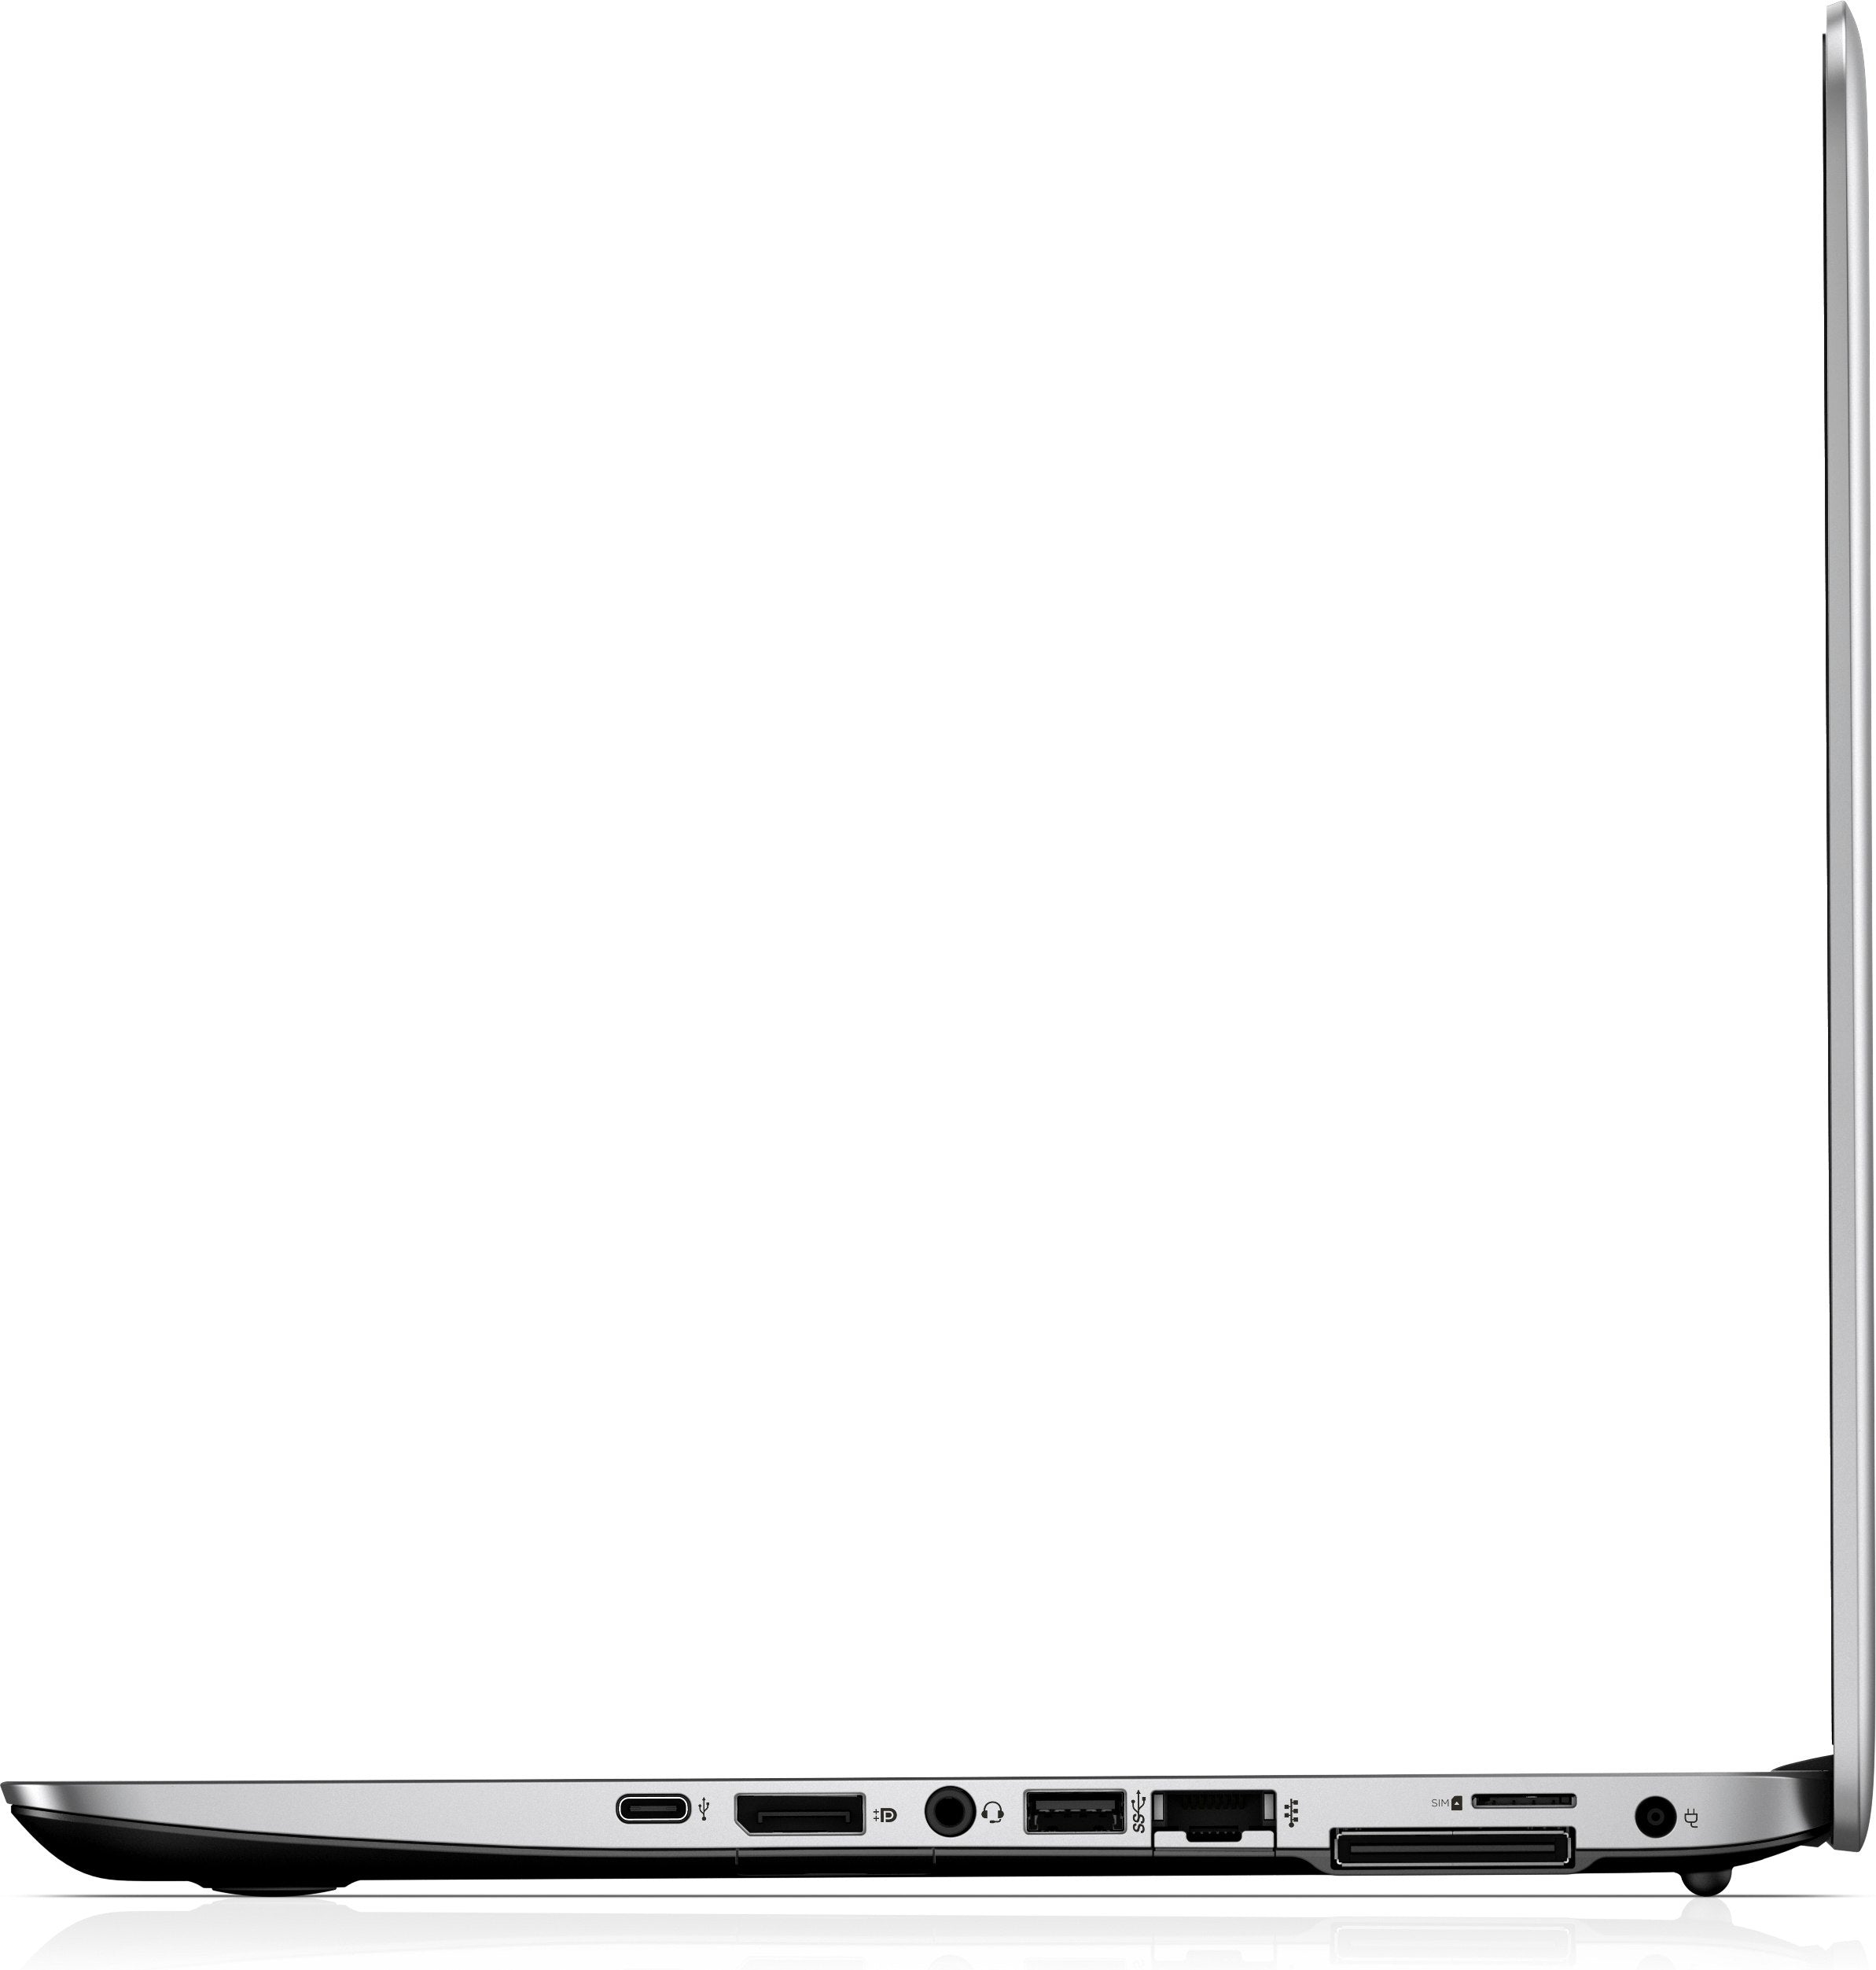 HP EliteBook 745 G4 Notebook side view ports